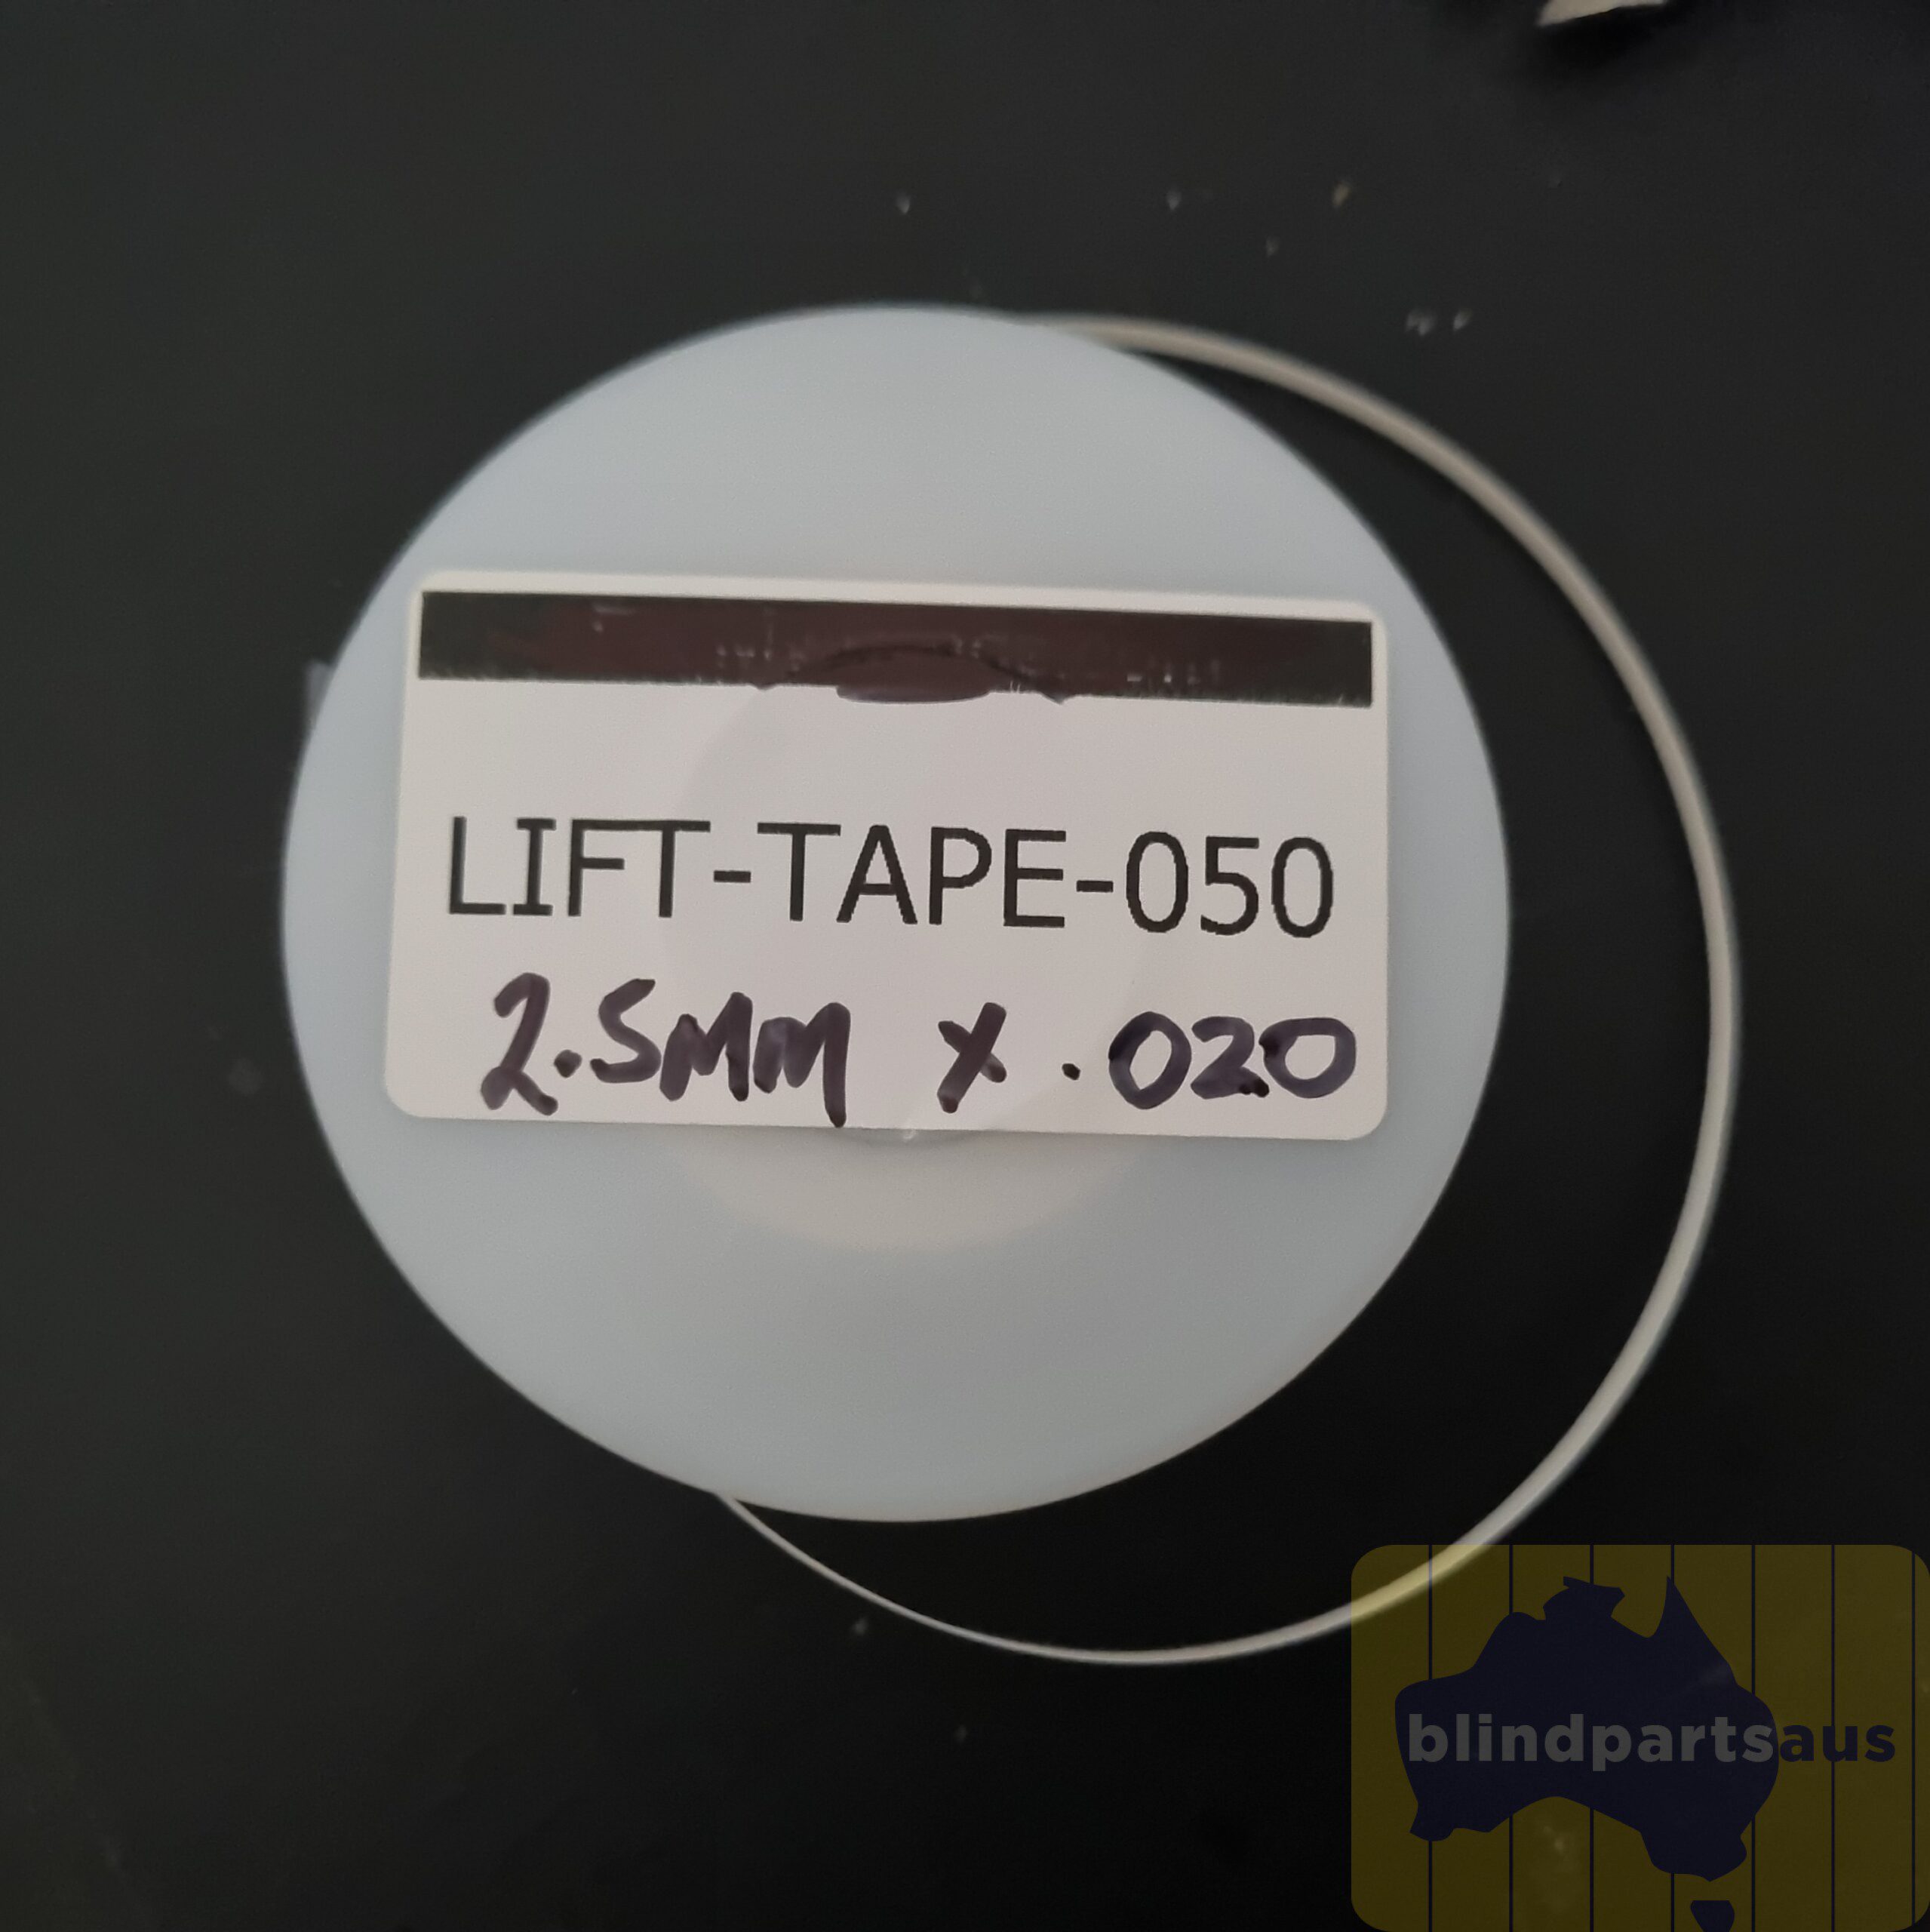 https://blindpartsaus.com.au/wp-content/uploads/2022/07/Lift-tape-cellular-blinds-scaled.jpg